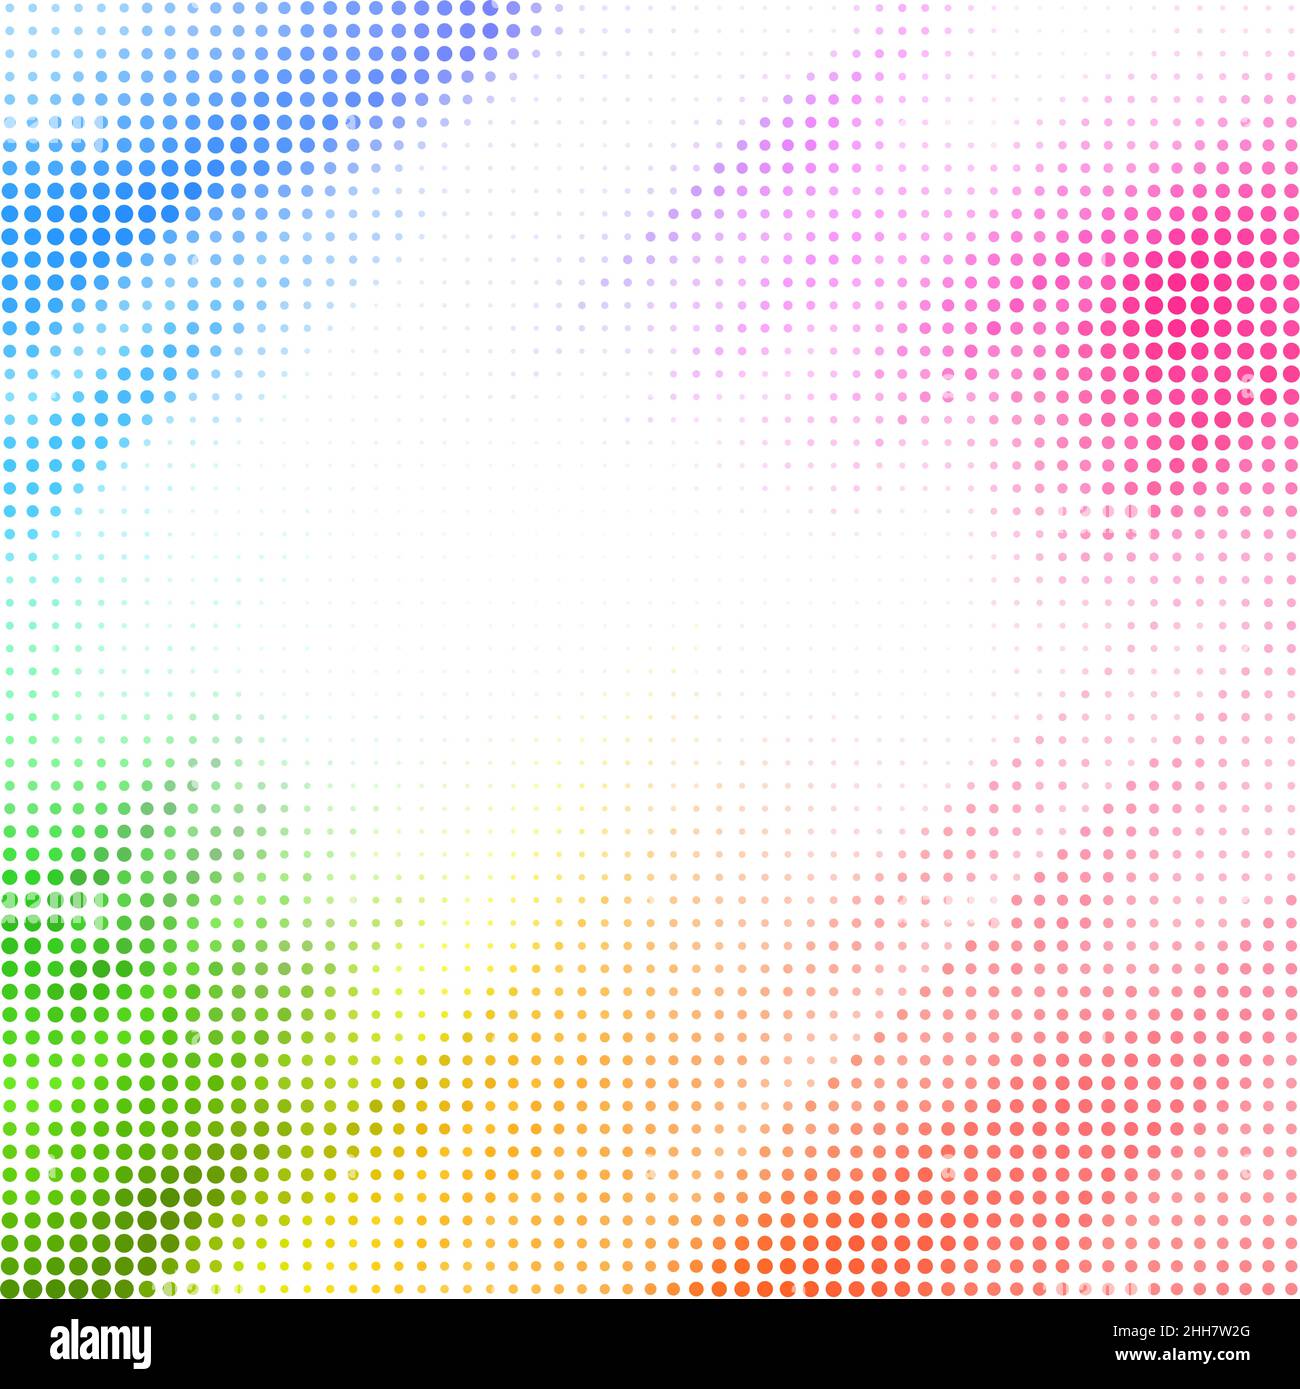 Mehrfarbiger Punktmuster mit Halbtoneffekt. Farbenfrohe Vektorgrafik Hintergrund Stock Vektor